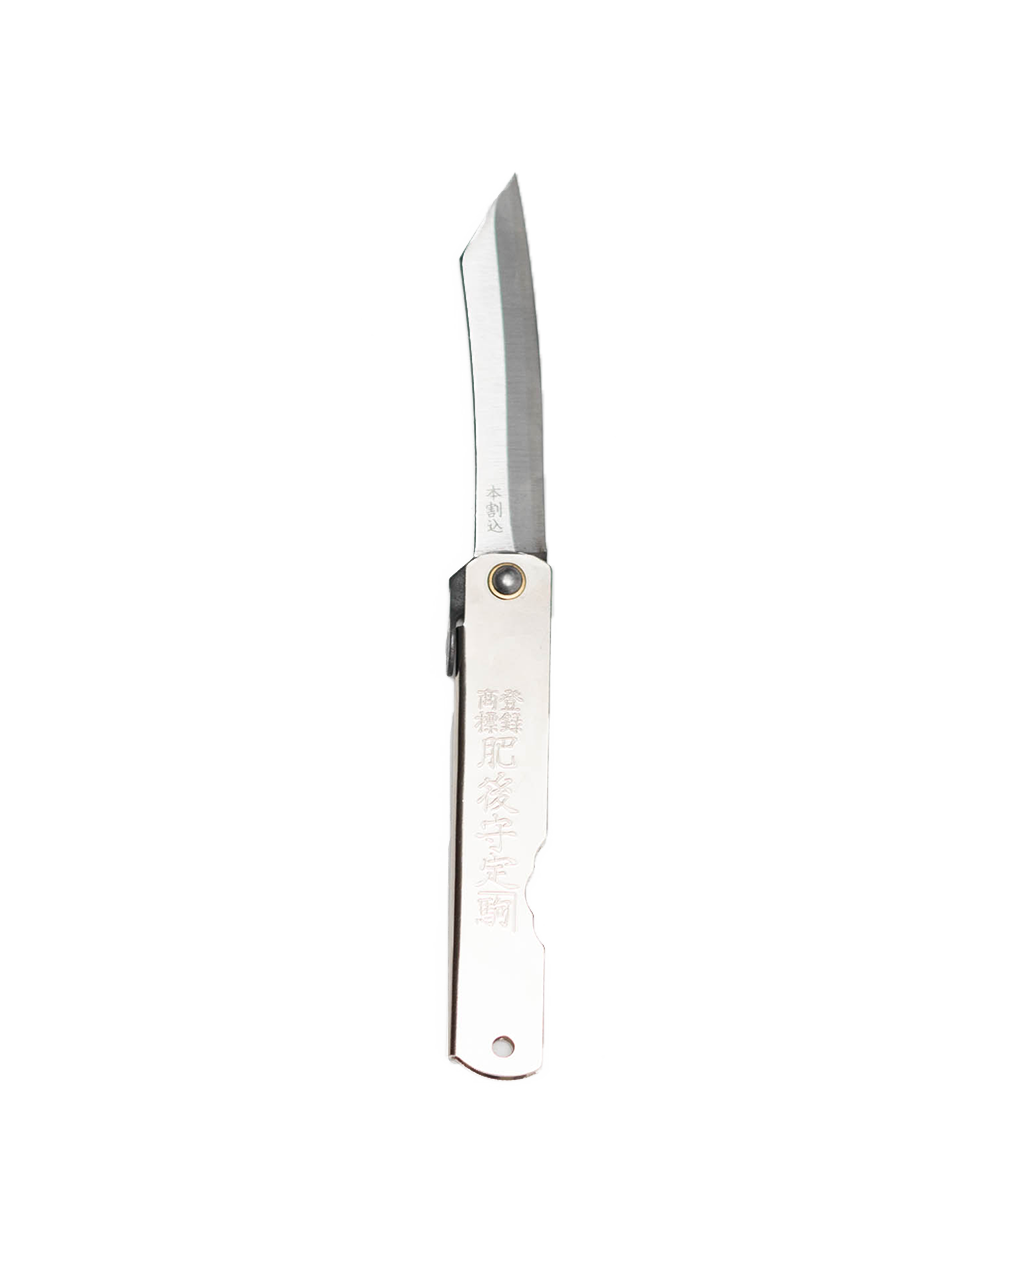 Japanese Folding Knife Stainless Medium